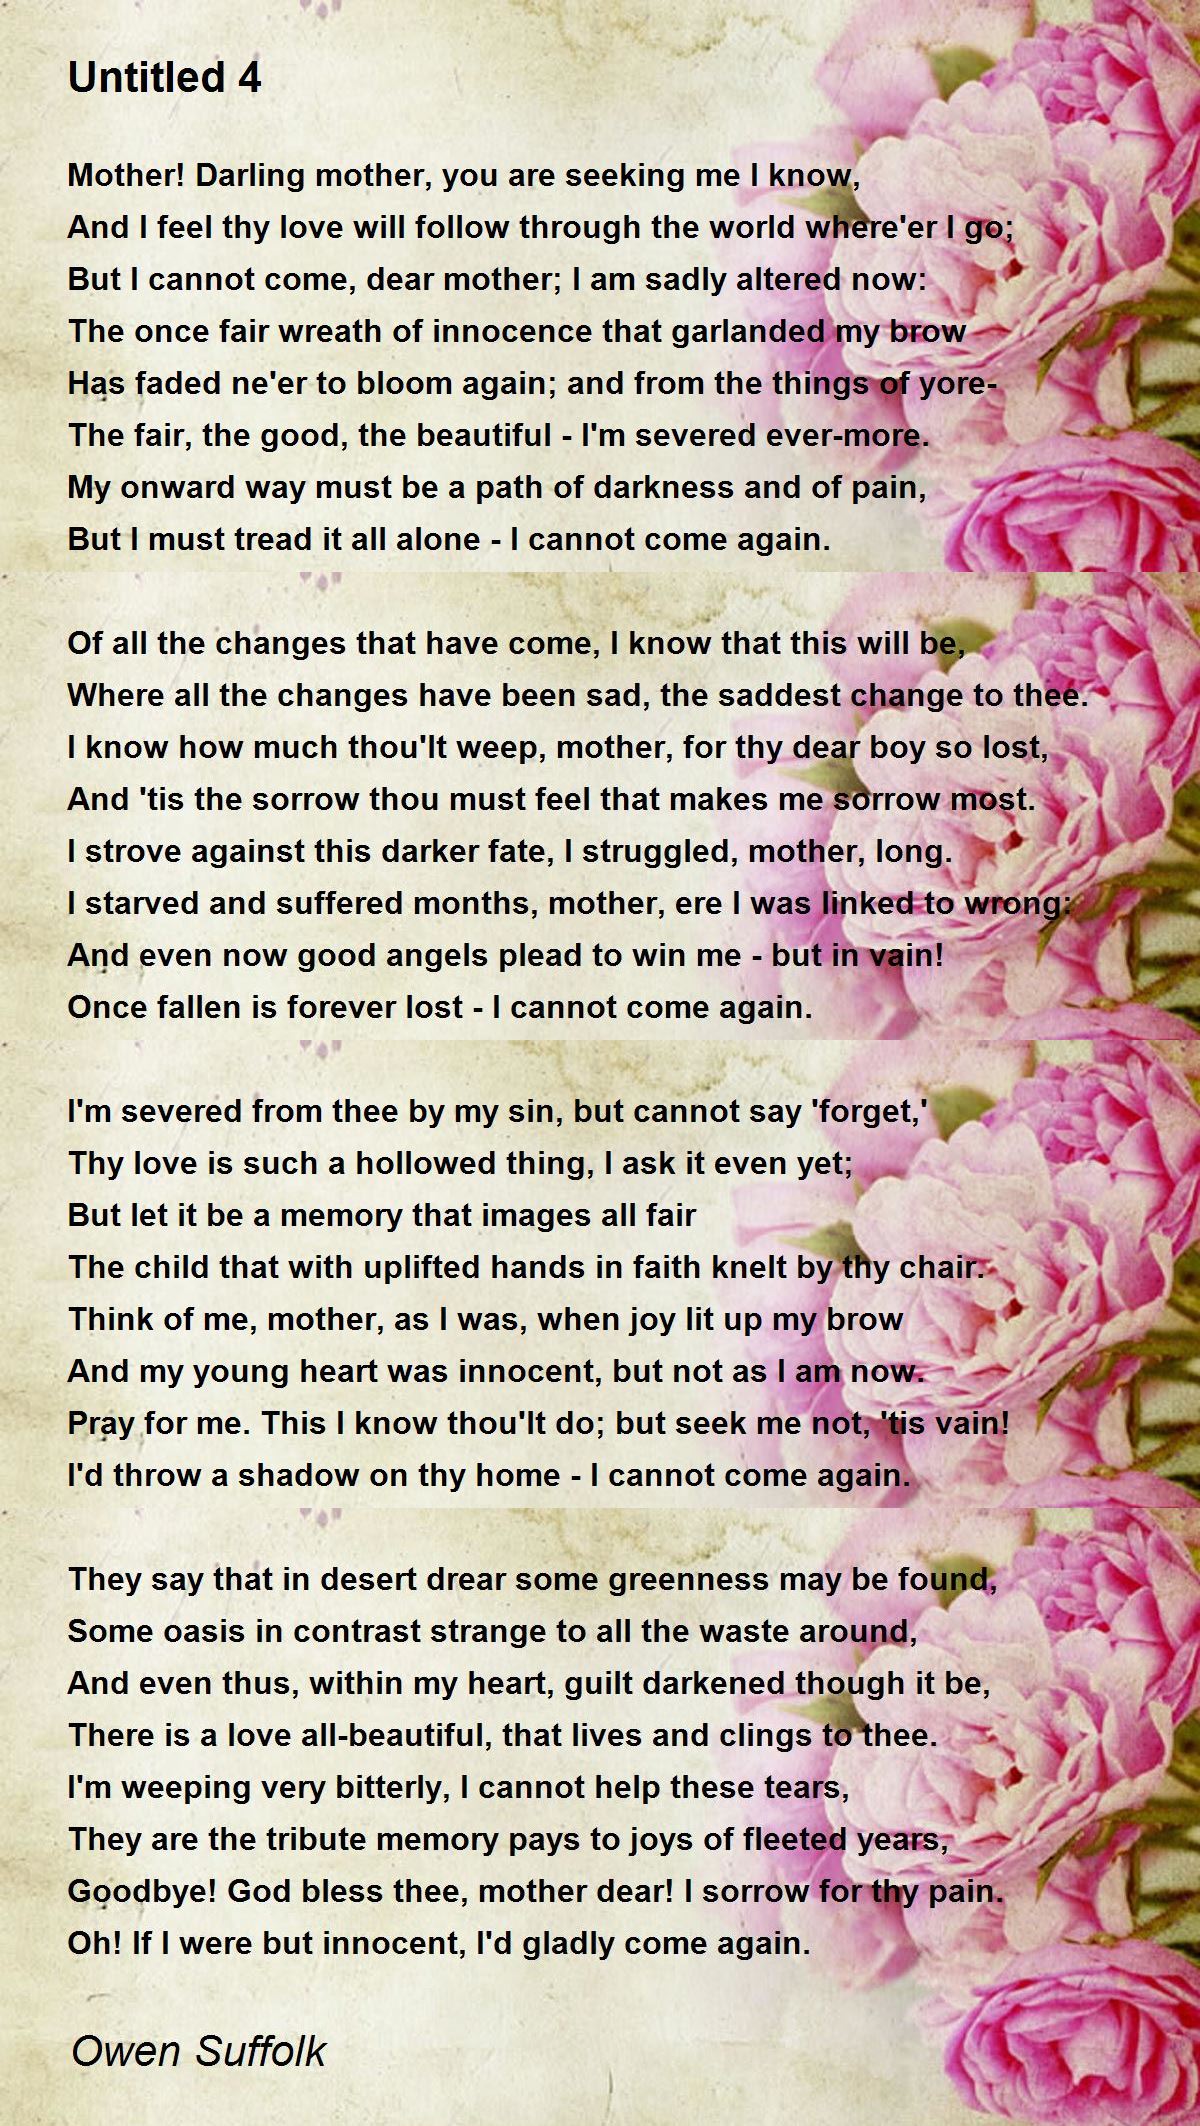 Untitled 4 - Untitled 4 Poem by Owen Suffolk